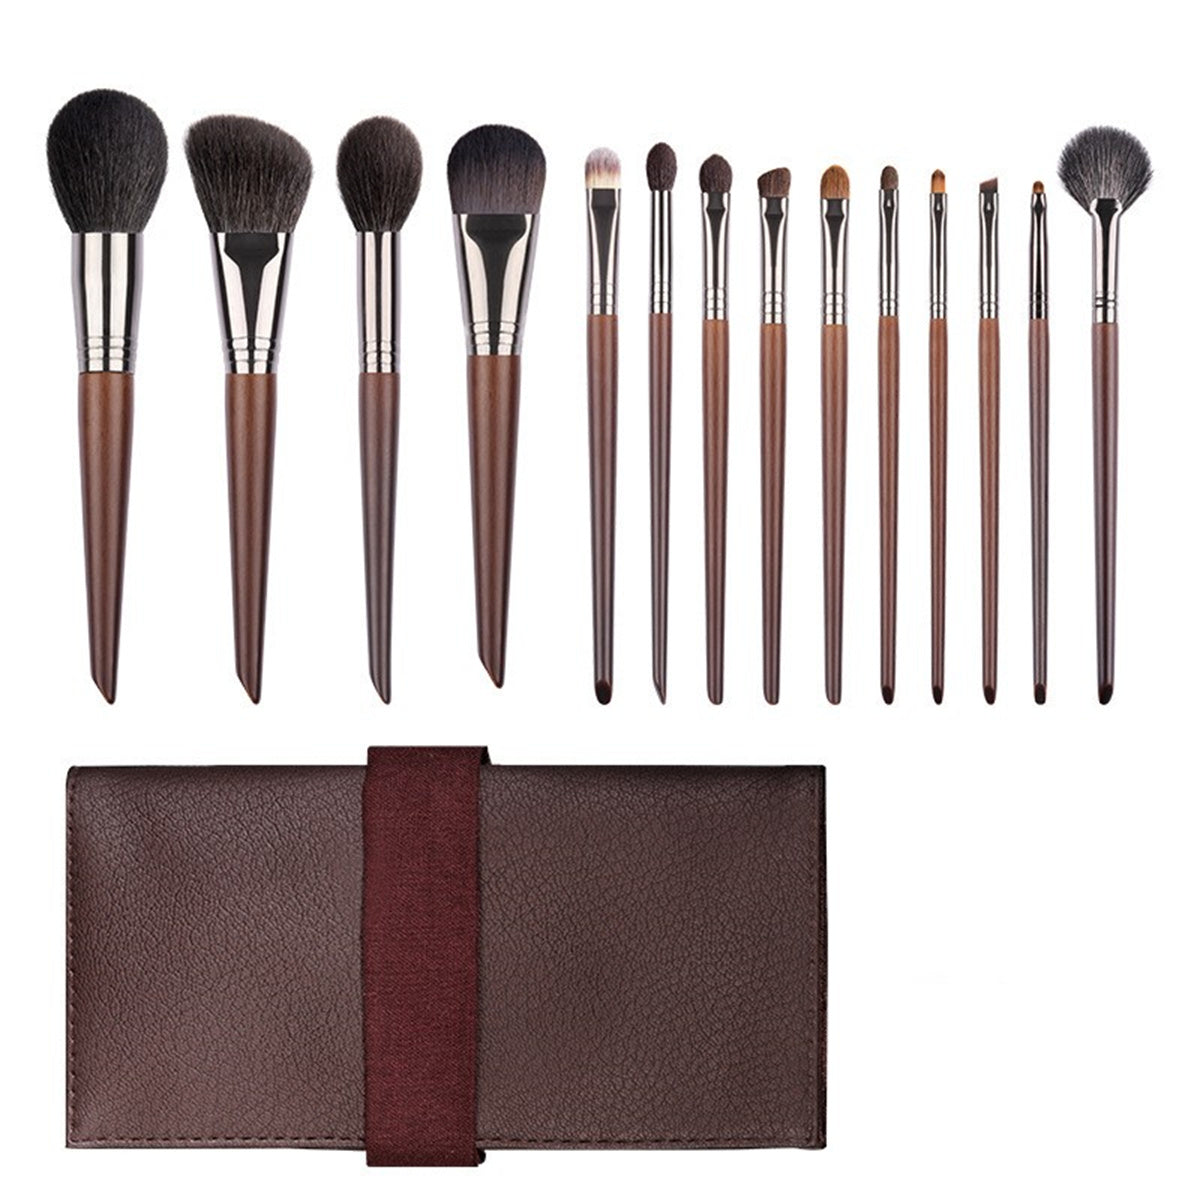 Makeup Brushes Set Foundation Blending Brush Face Powder Blush Concealers Eye Shadows Make Up Brushes Kit with Bag - 24pcs